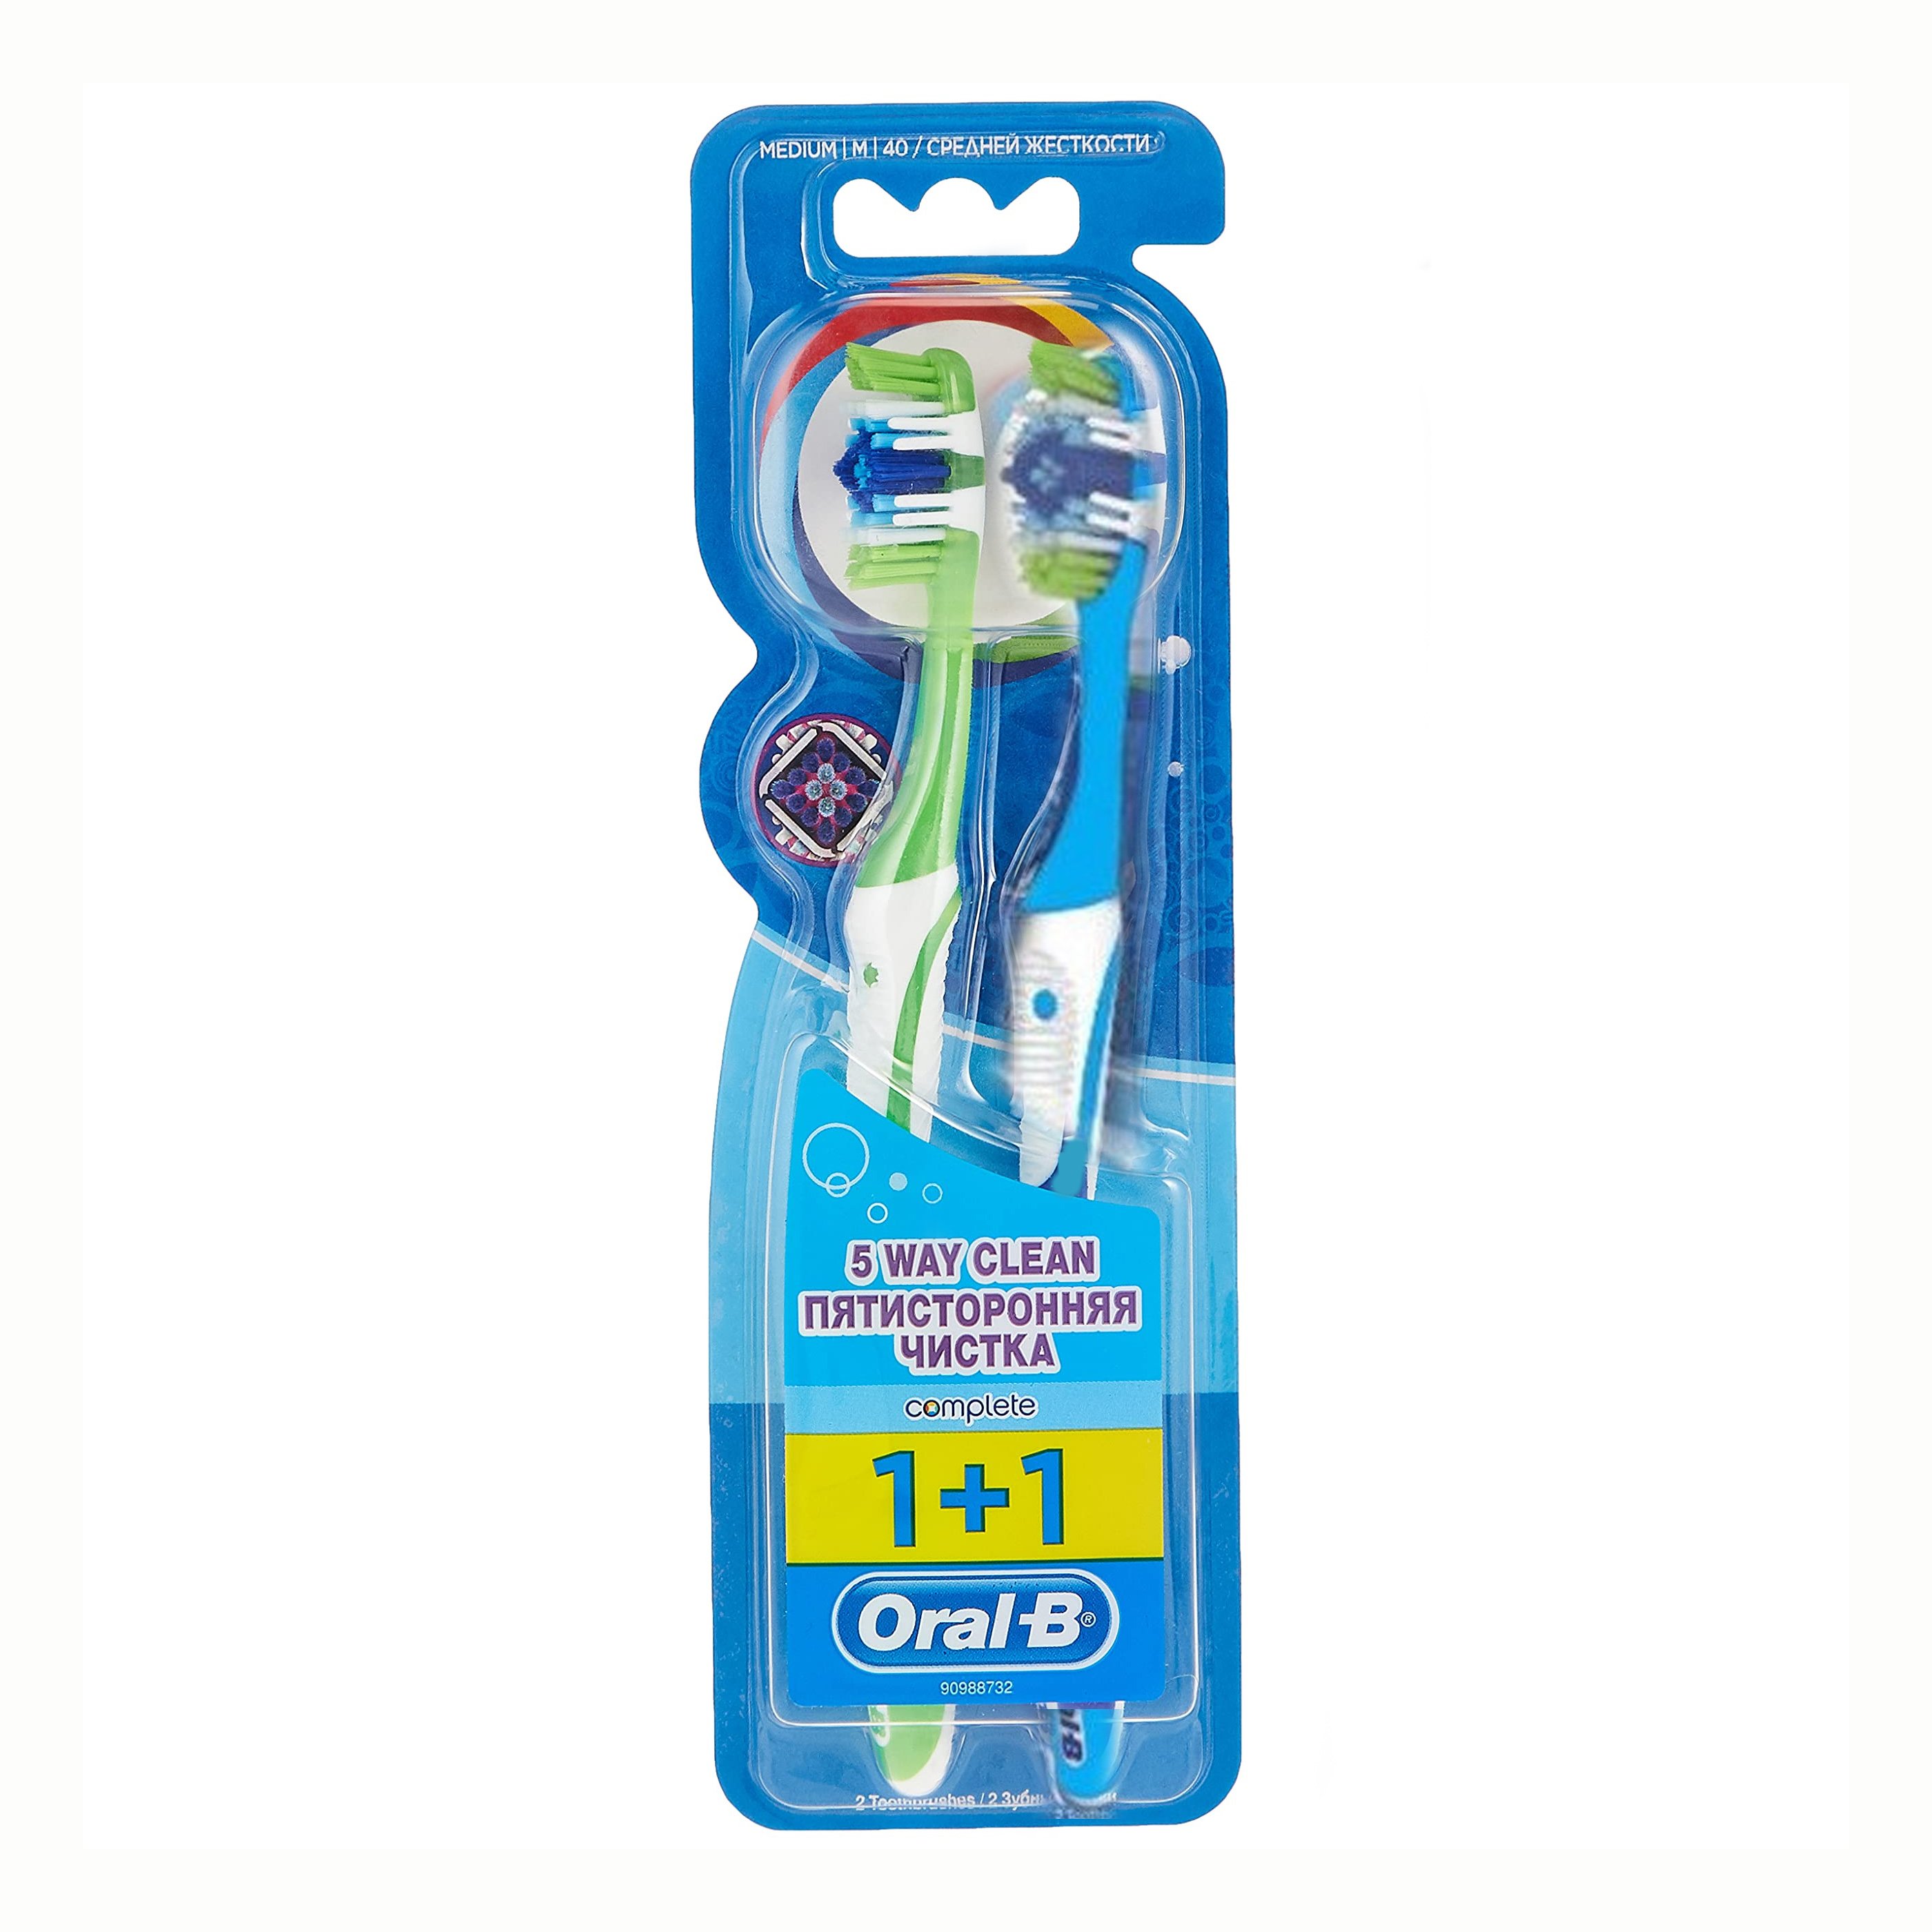 Oral-B Complete 5 Way Clean Οδοντόβουρτσα 40 Μέτρια 1+1 δώρο – Πράσινο – Γαλάζιο